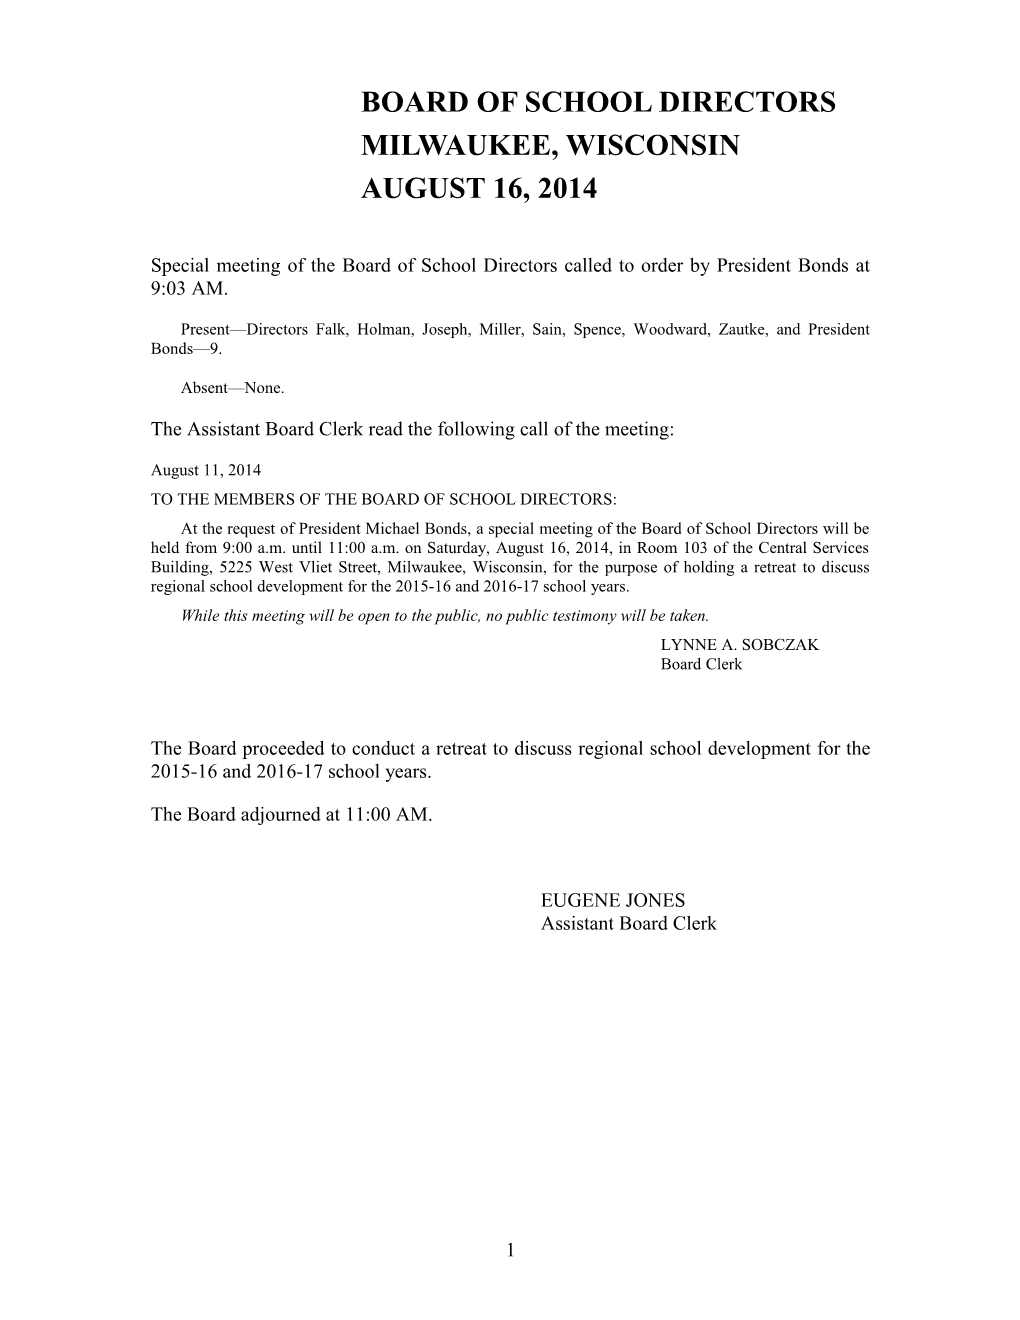 August 2014 Proceedings of the Milwaukee Board of School Directors